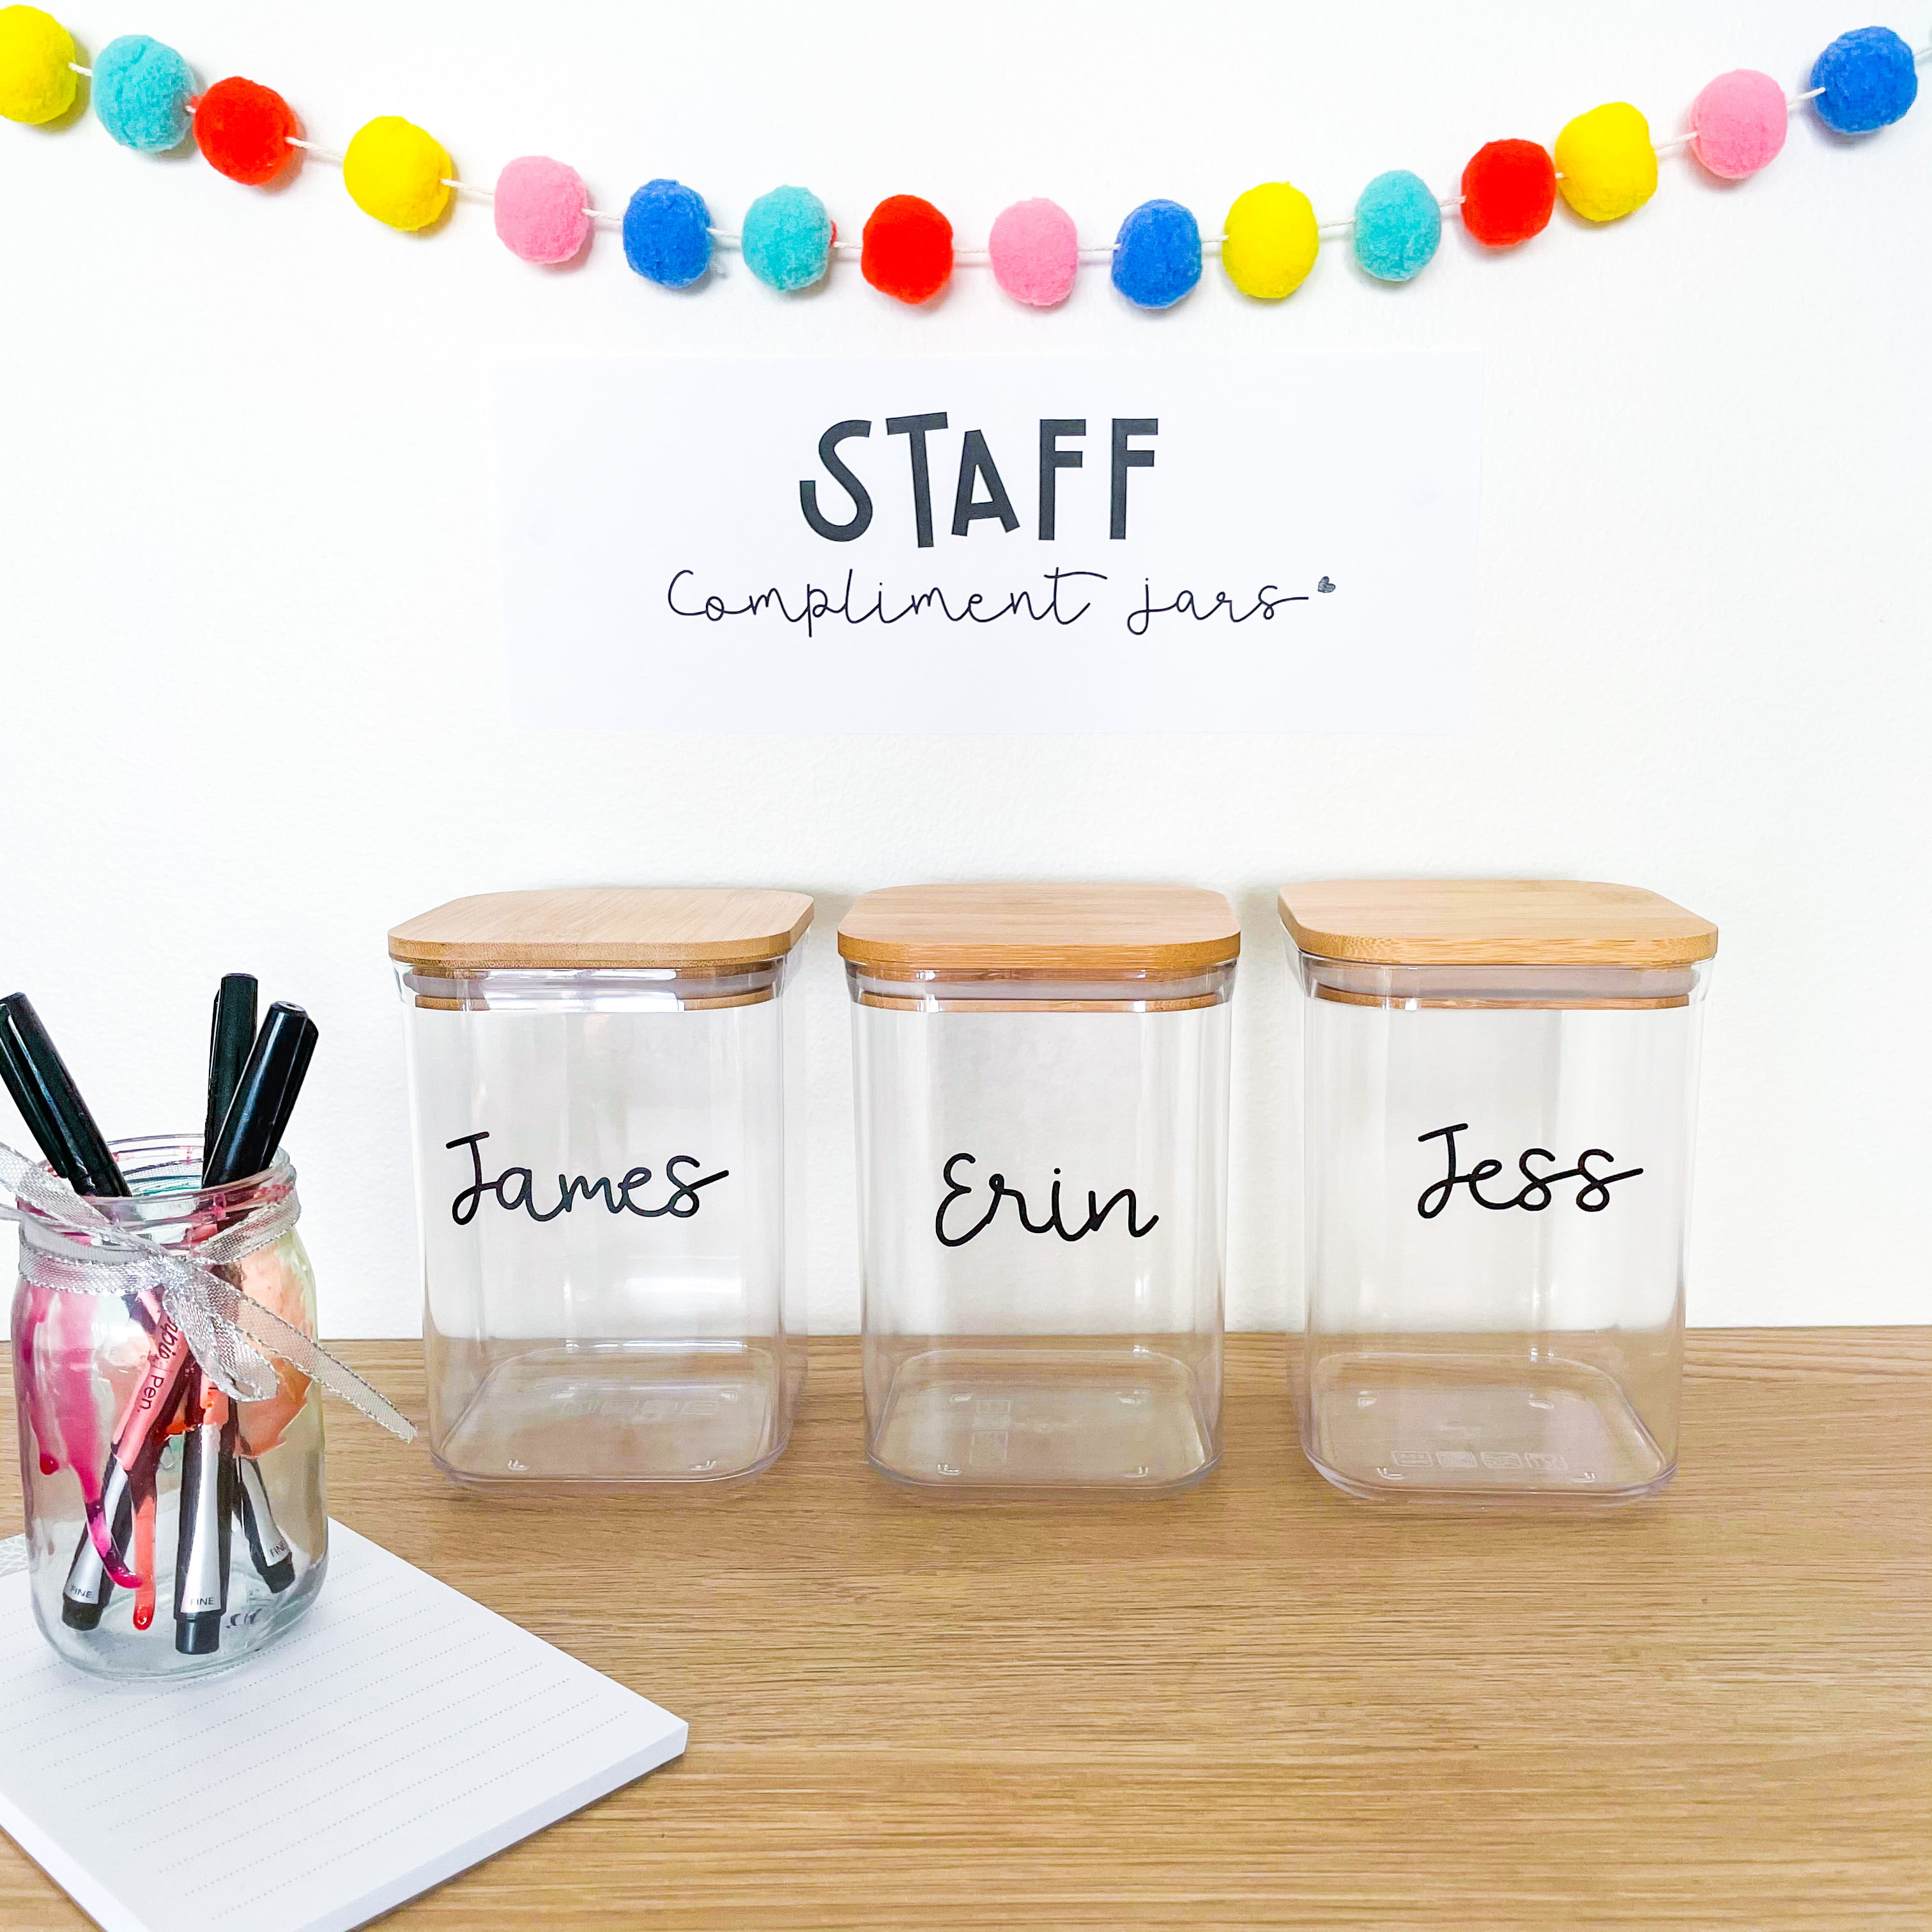 Staff-compliment-jars